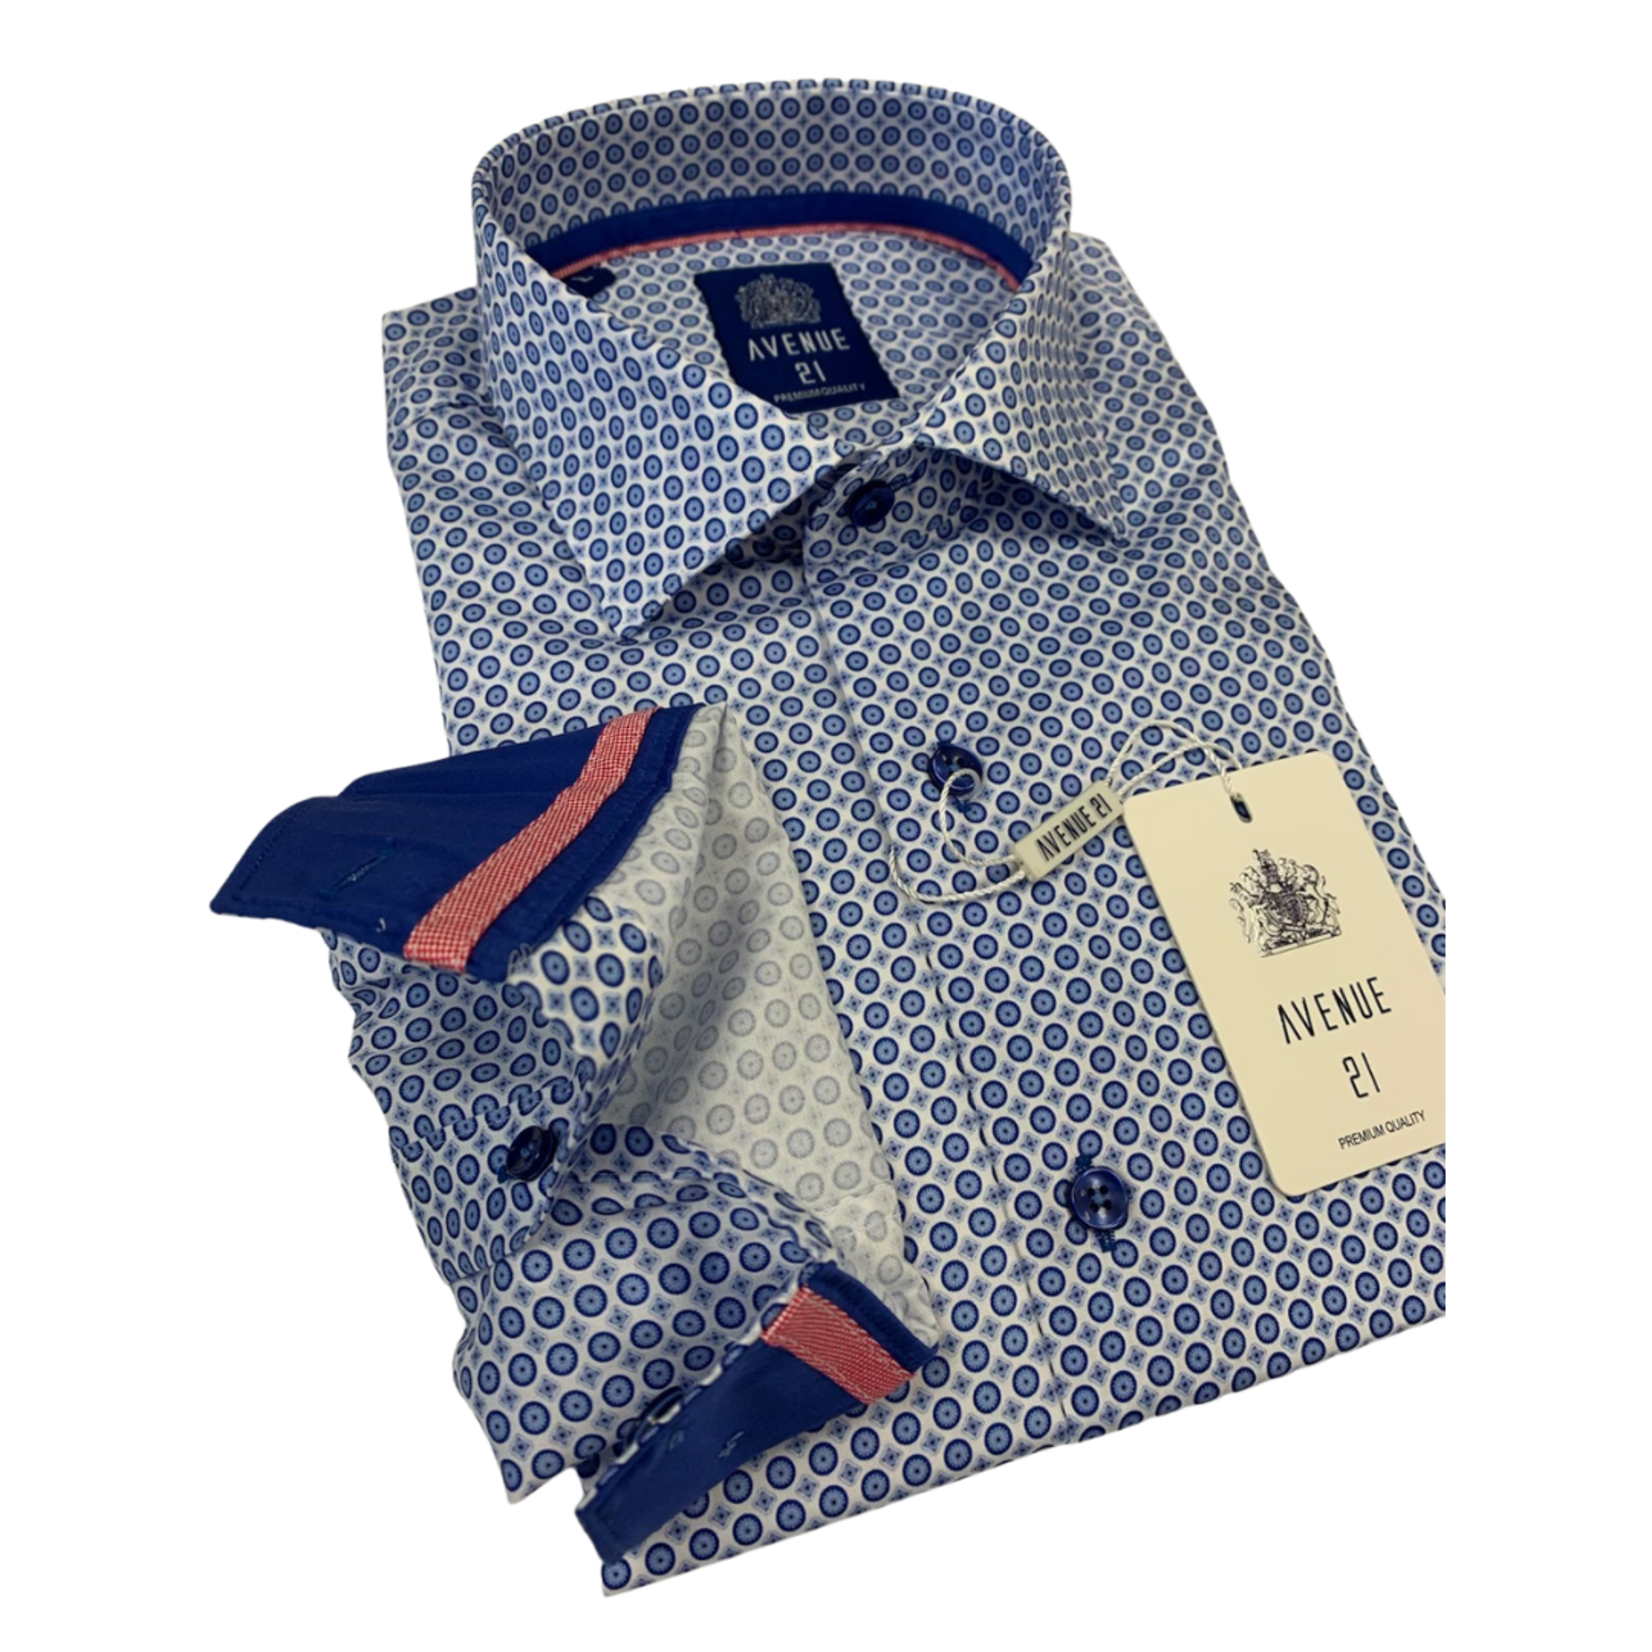 Michel & Martin Avenue 21 Multi Print Long Sleeve Button Down Shirt